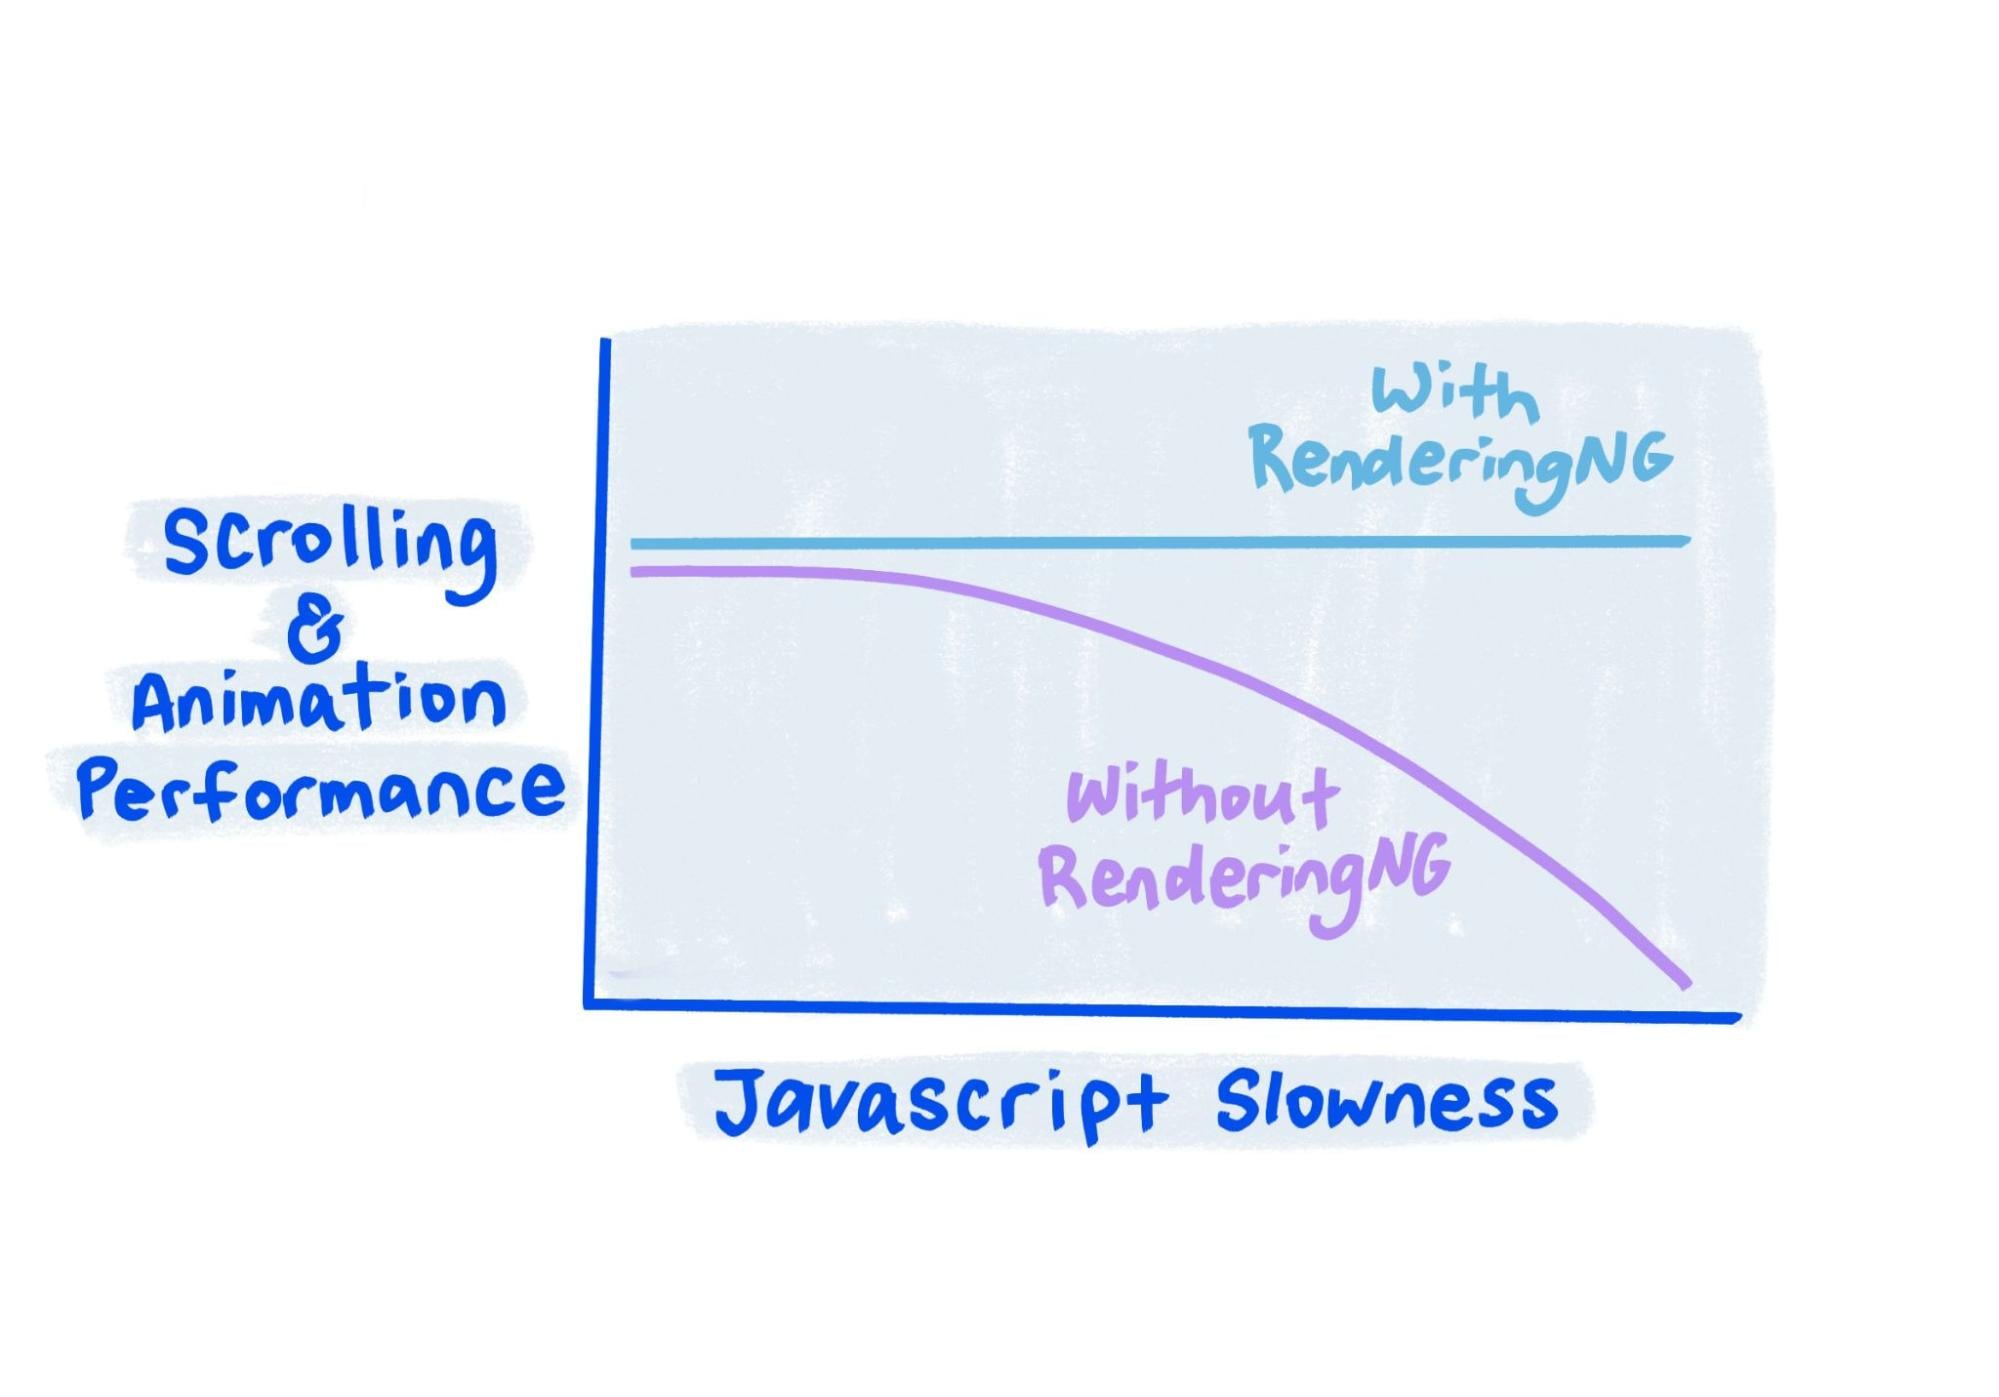 Sketch에 따르면 JavaScript가 매우 느린 경우에도 RenderNG 성능이 유지됩니다.